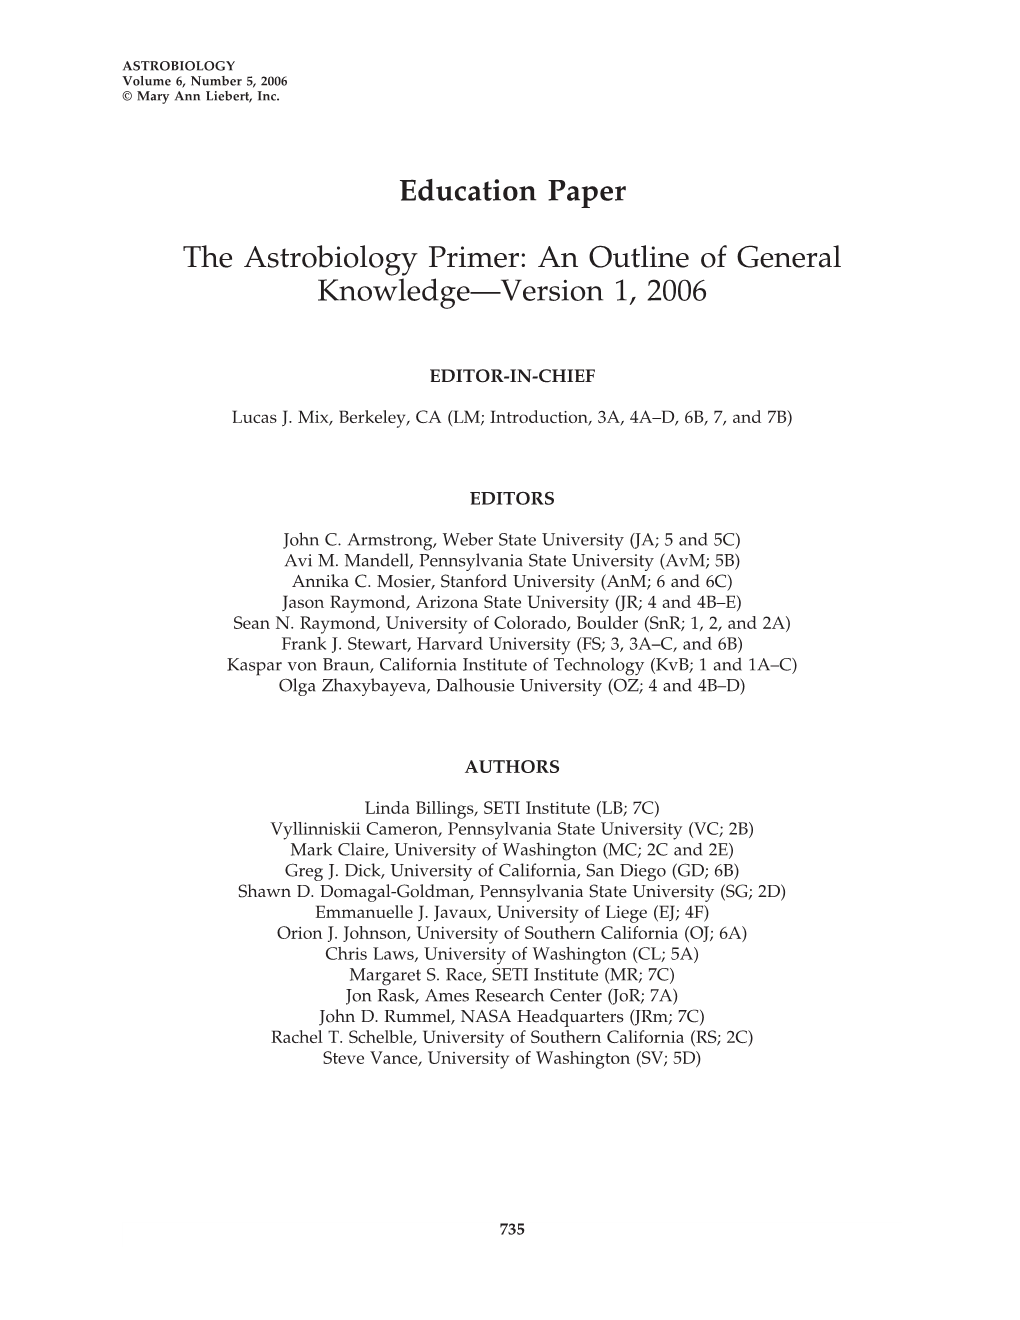 Education Paper the Astrobiology Primer